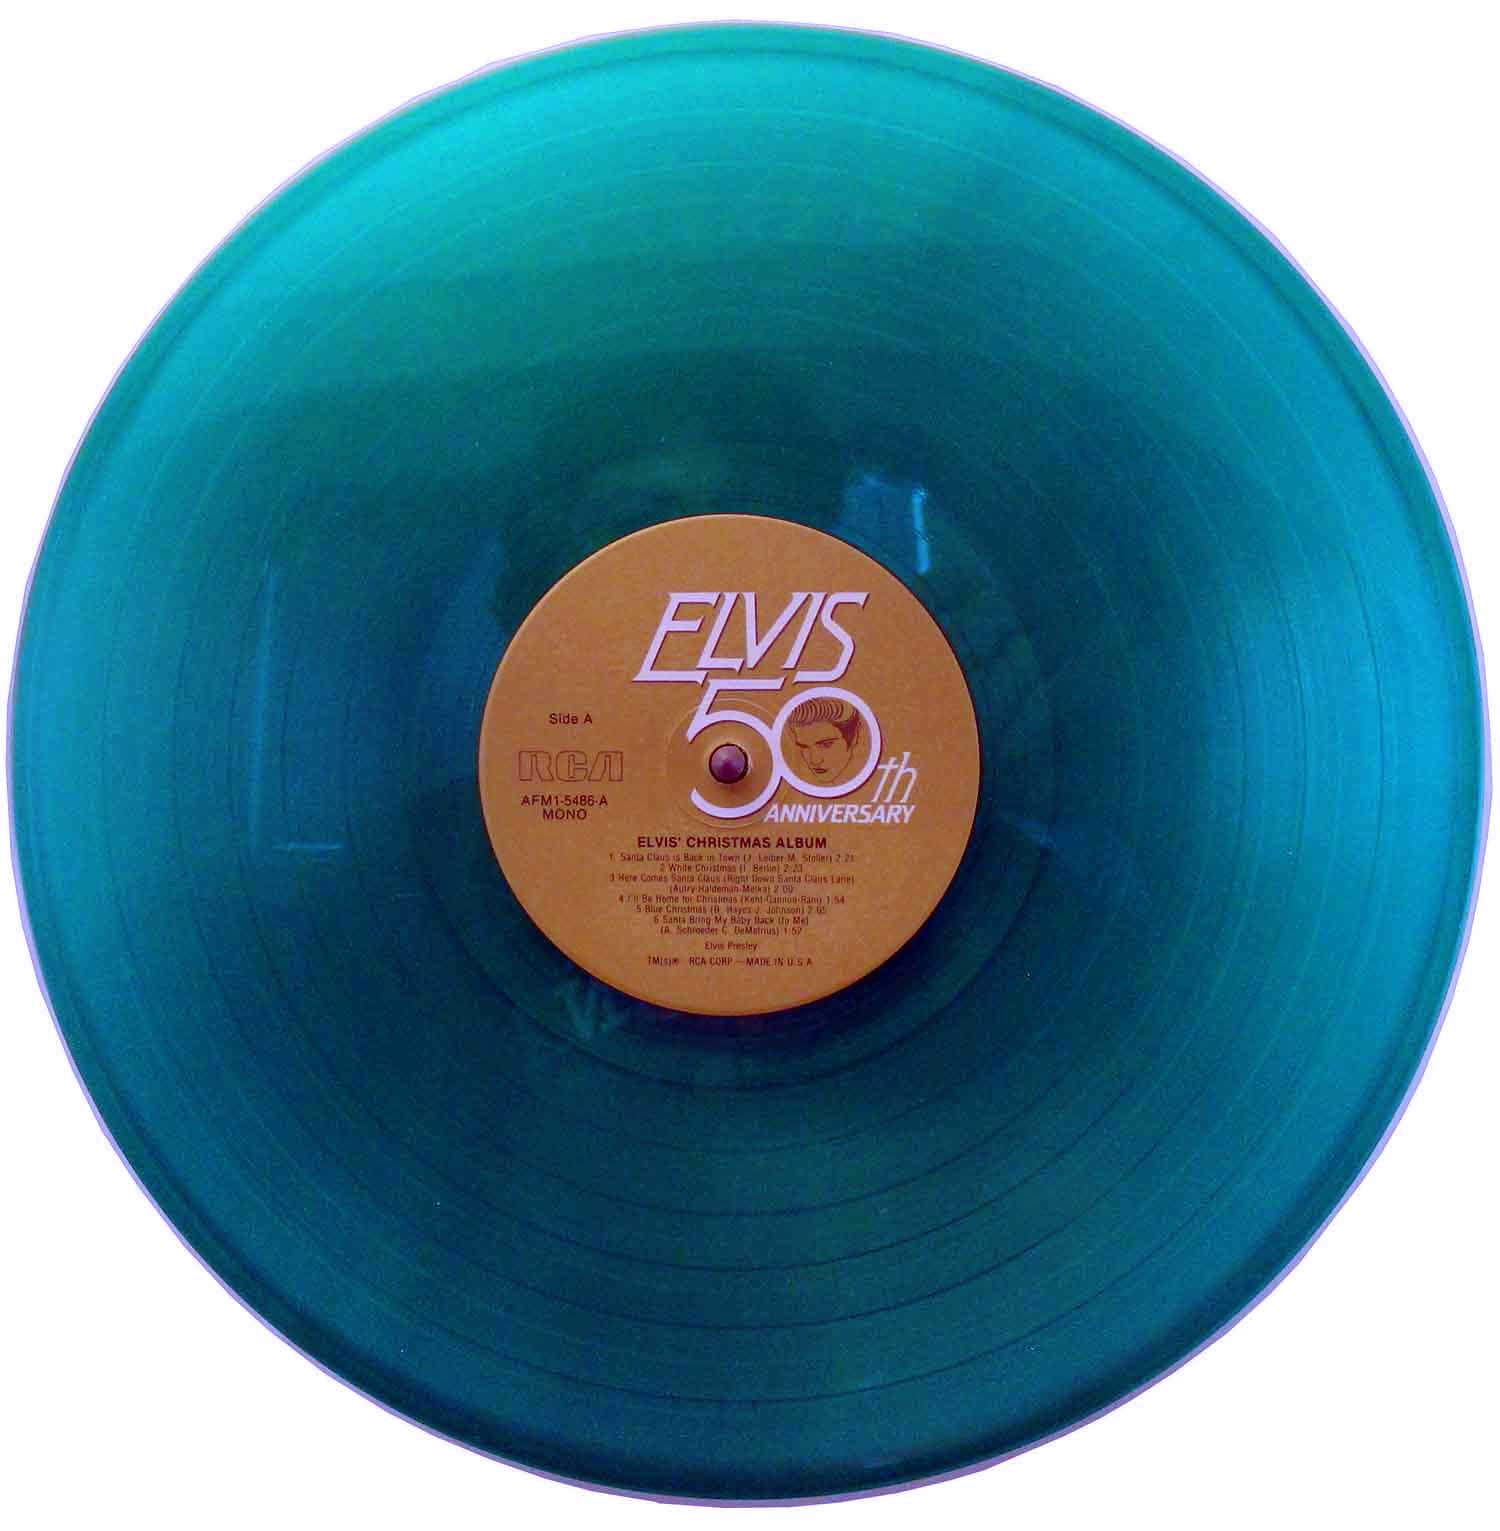 Presley – Christmas Album limited U.S. green vinyl LP